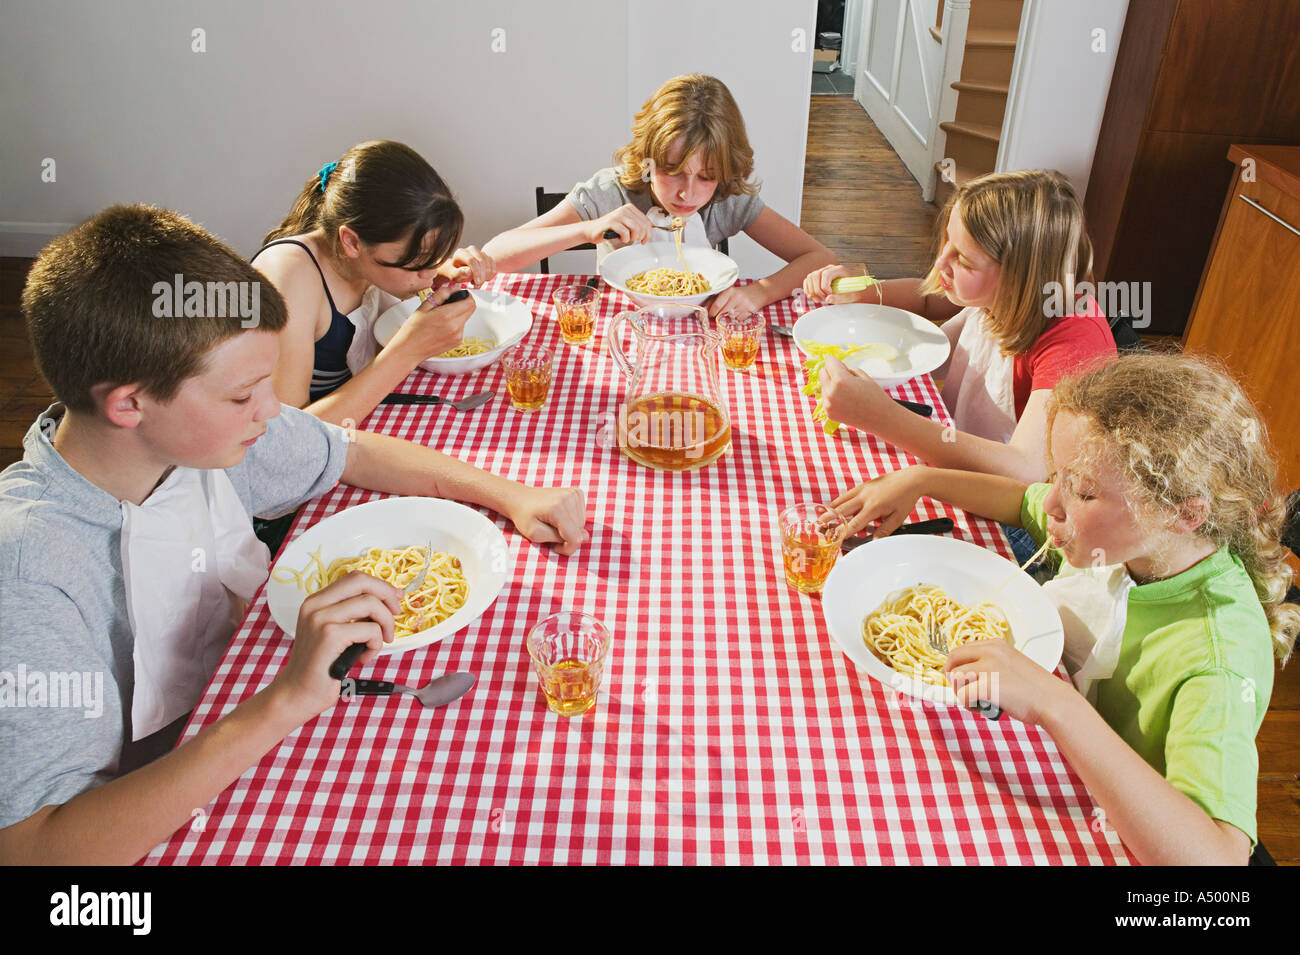 Children eating spaghetti Stock Photo